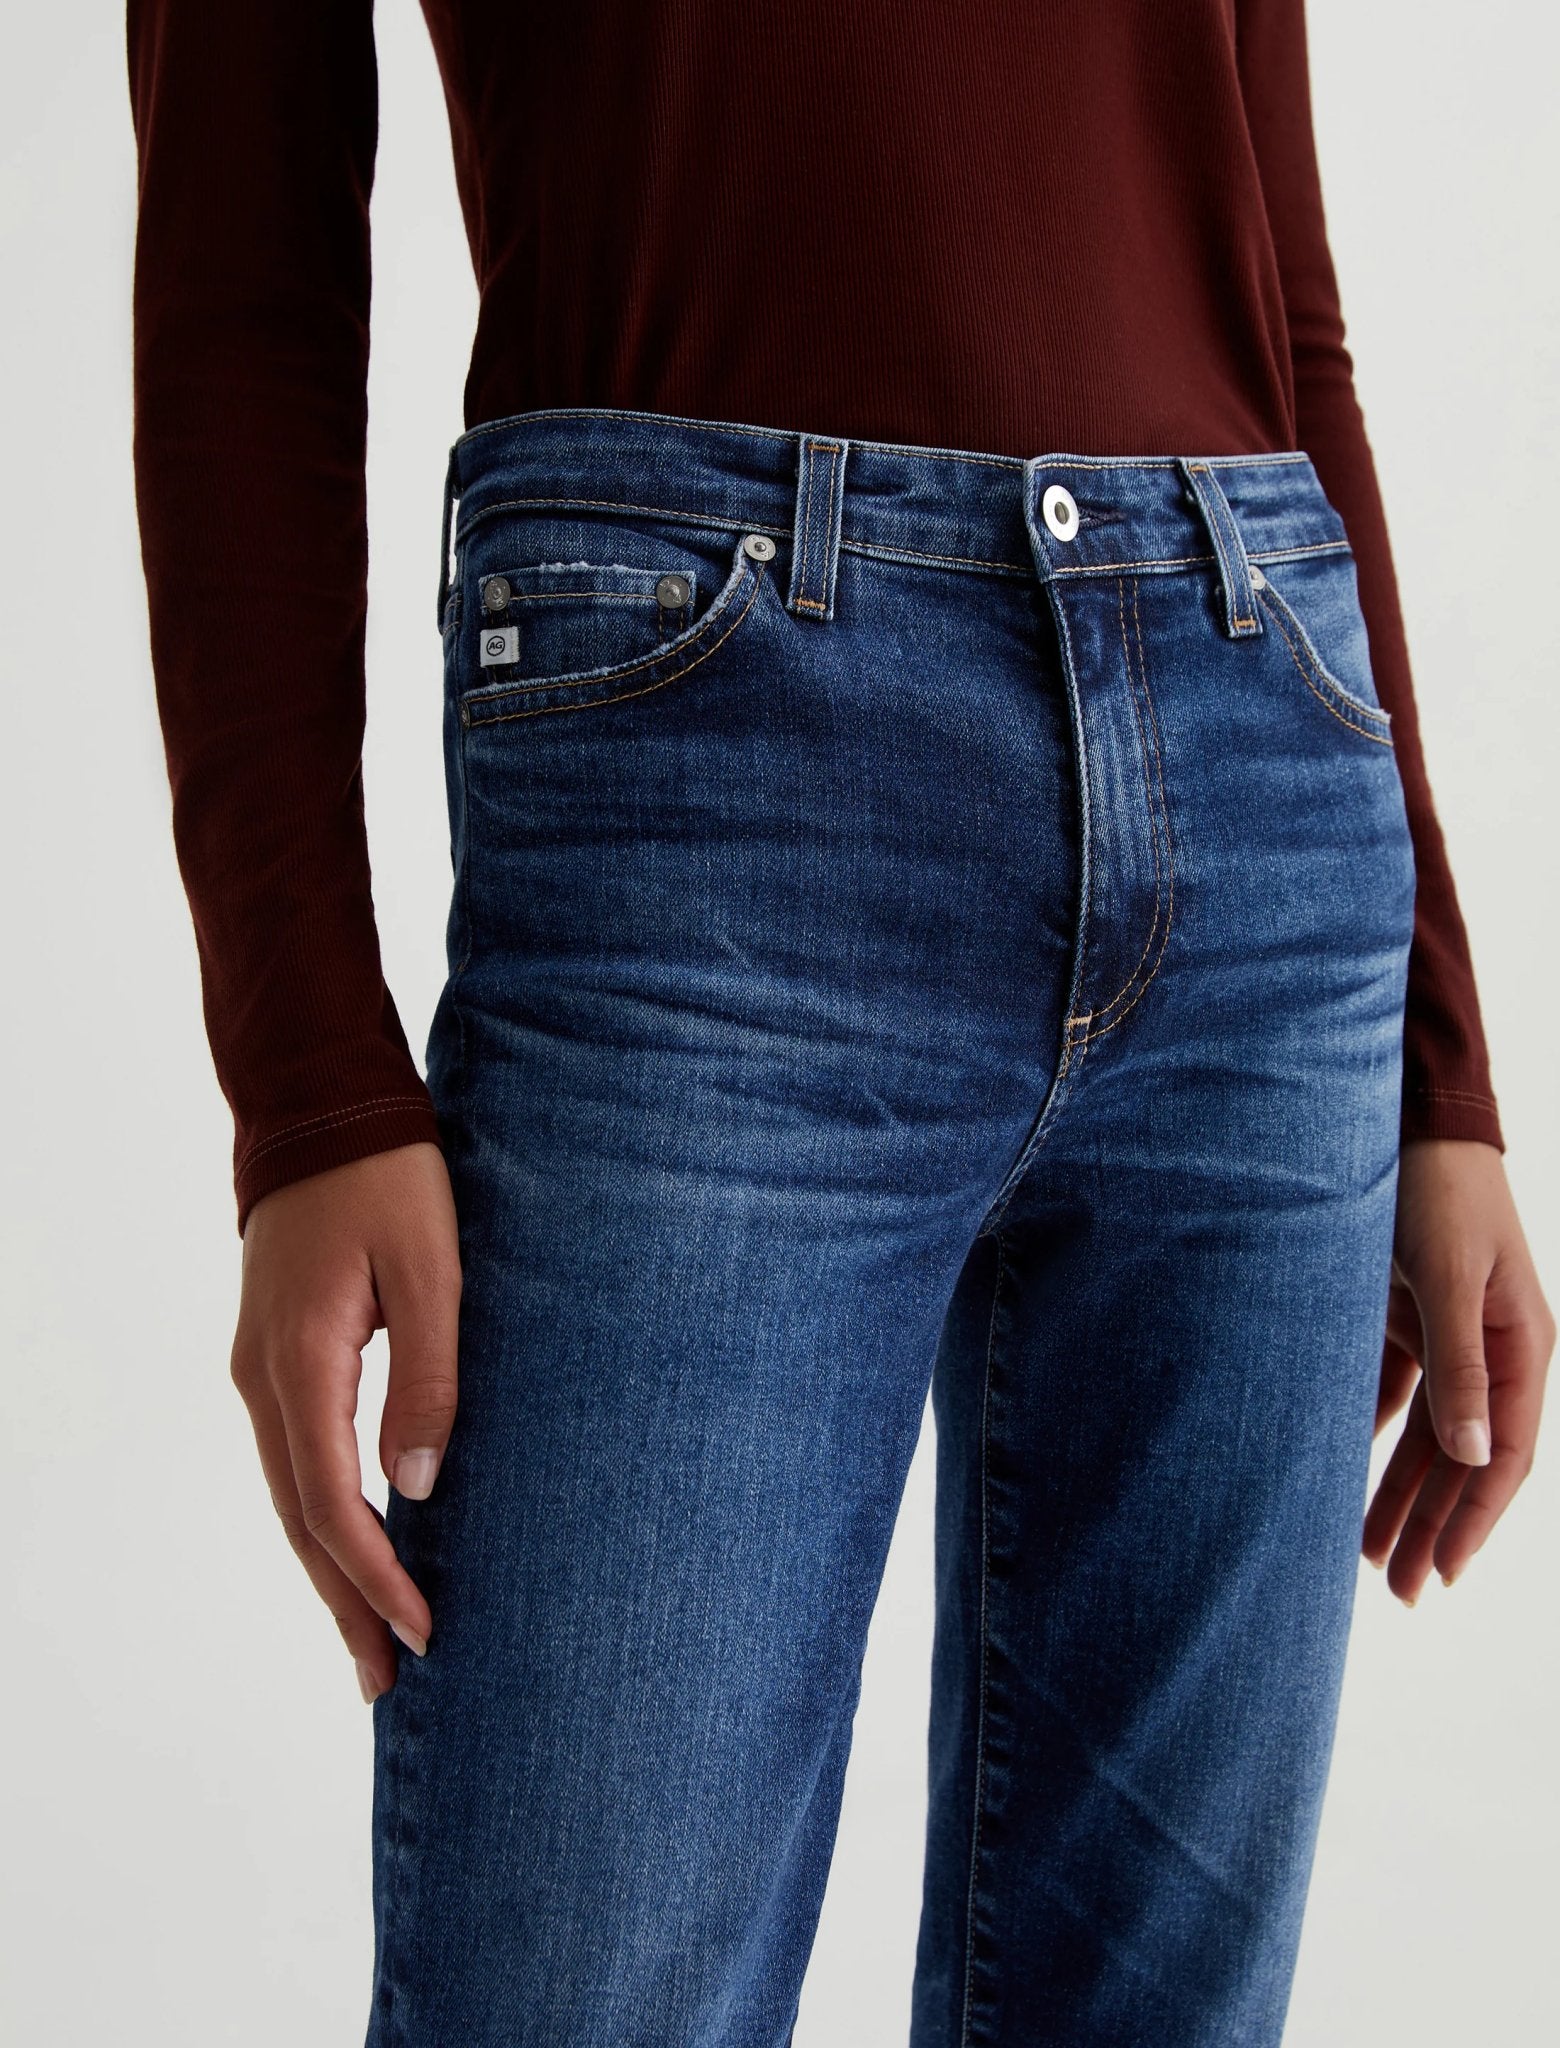 Mari High Rise Slim Straight Jeans - AG Jeans - Danali - EMP1875-08YECO-24